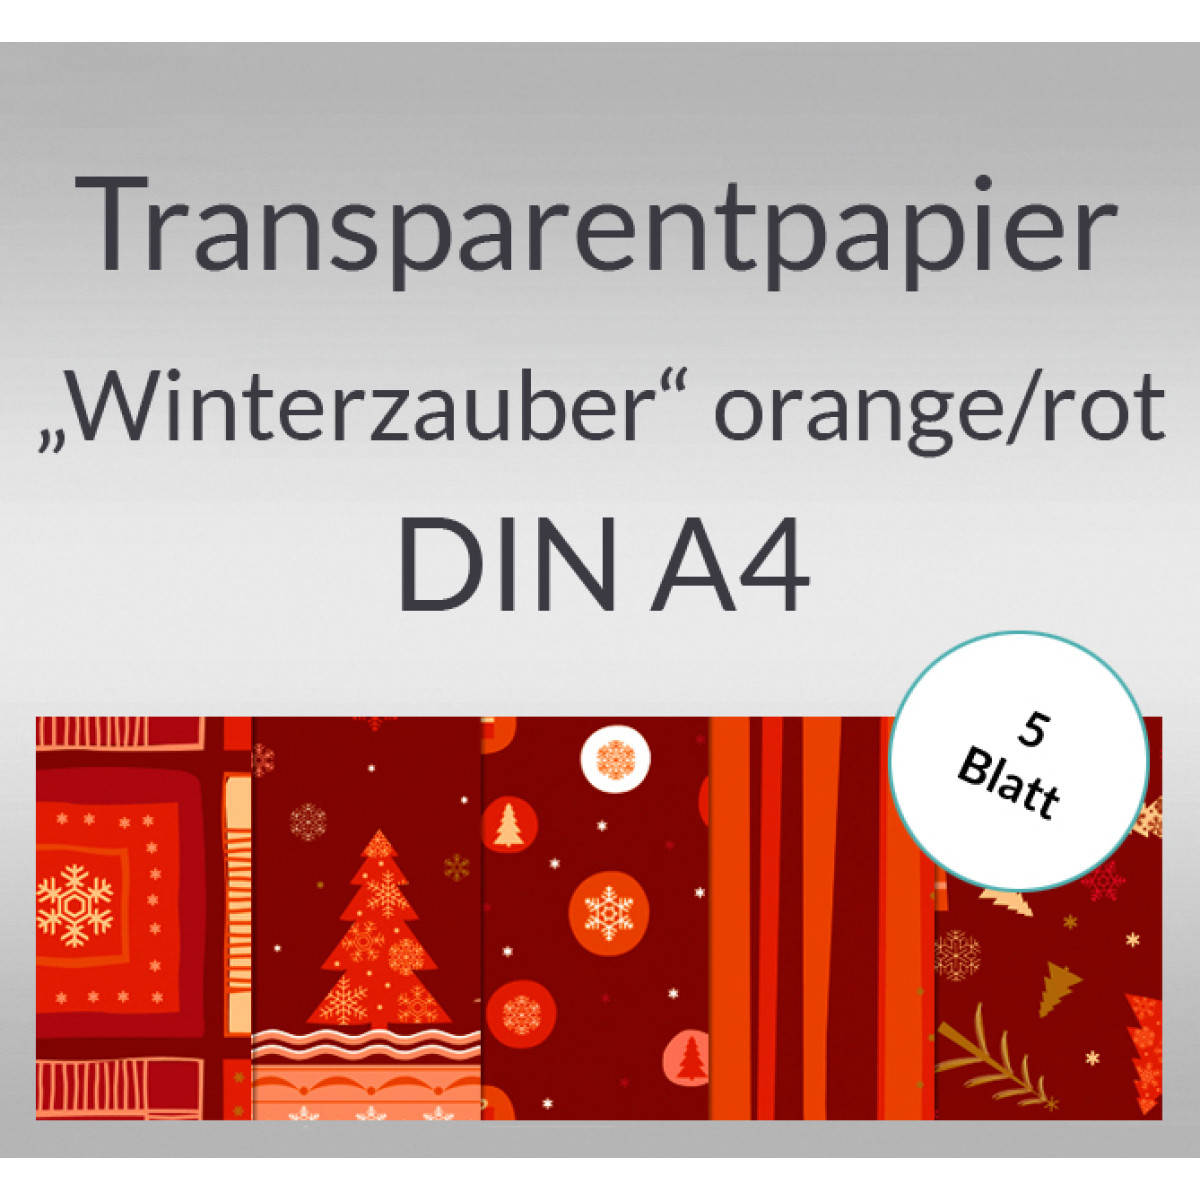 Transparentpapier "Winterzauber" orange/rot DIN A4 - 5 Blatt